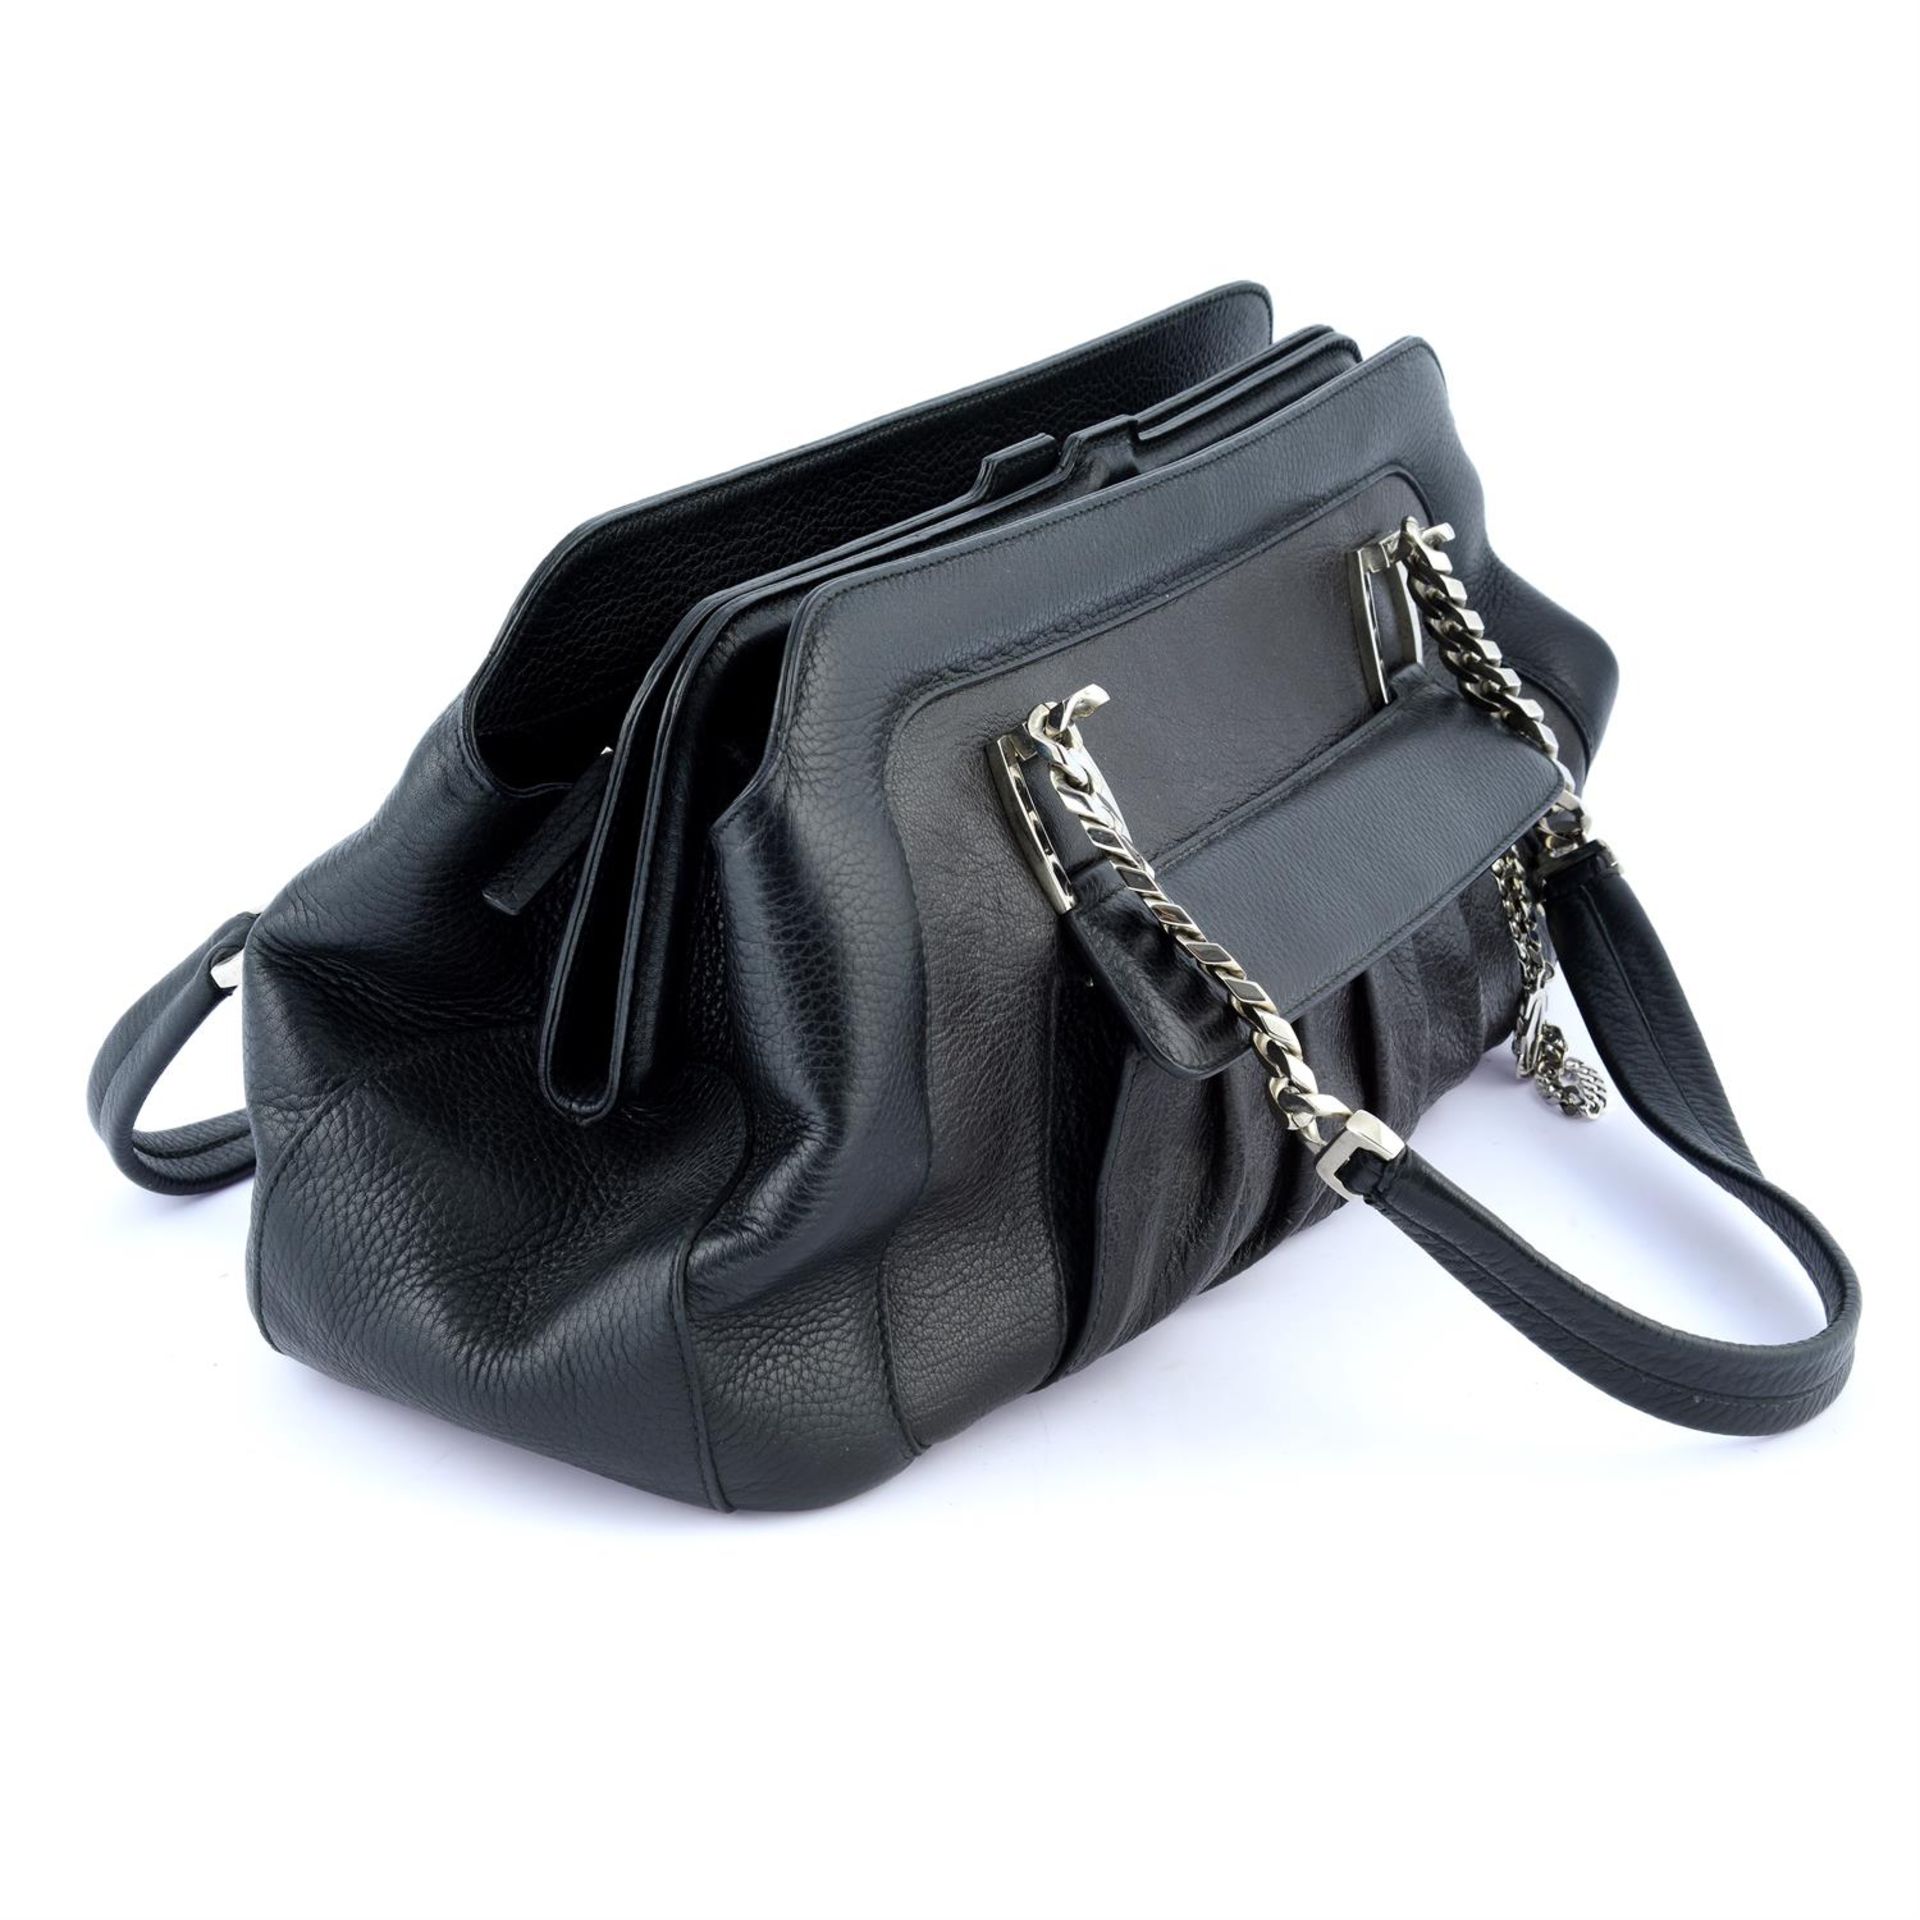 CARTIER - a black leather Multi-Pocket handbag.m - Image 3 of 4